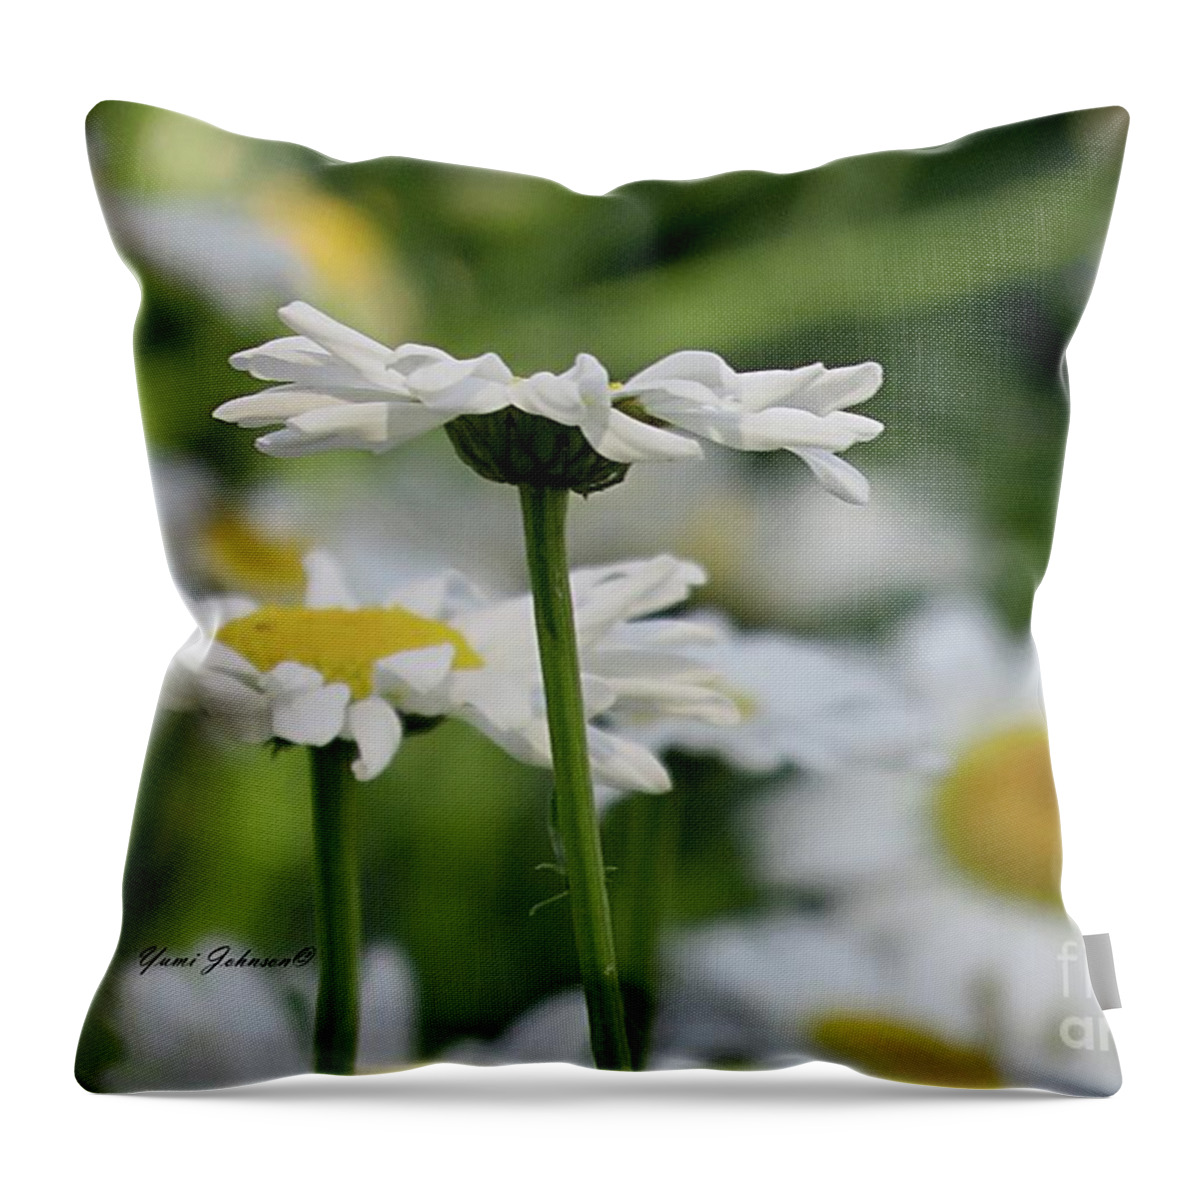 Daisy Throw Pillow featuring the photograph Daisy petals by Yumi Johnson